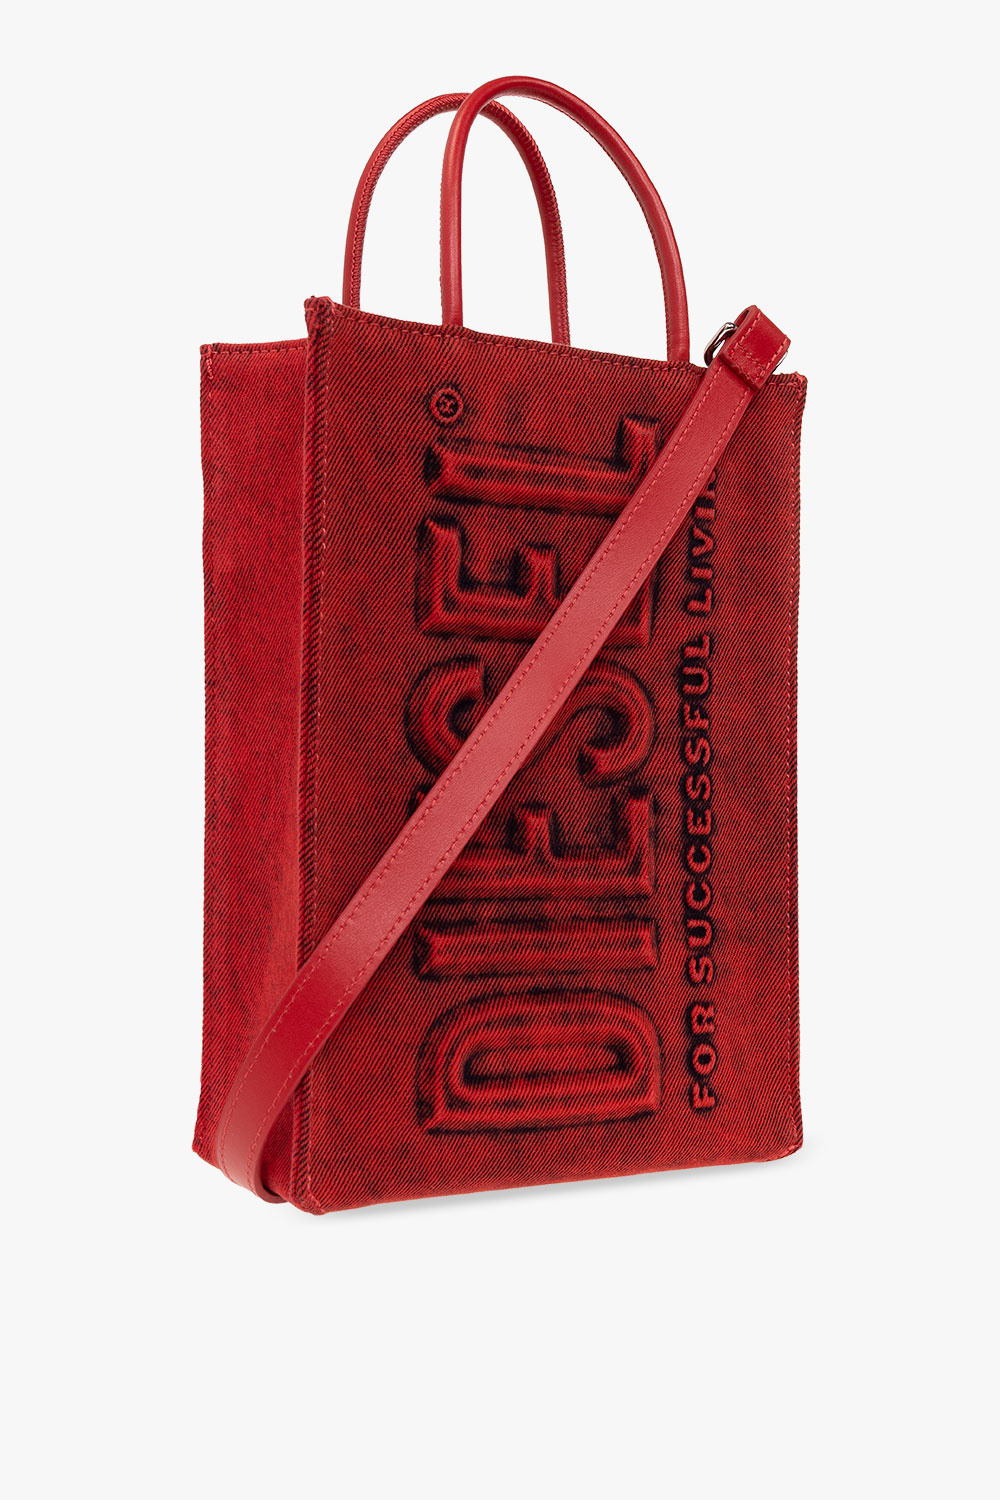 Diesel 'DSL 3D' shopper bag | Women's Bags | Vitkac